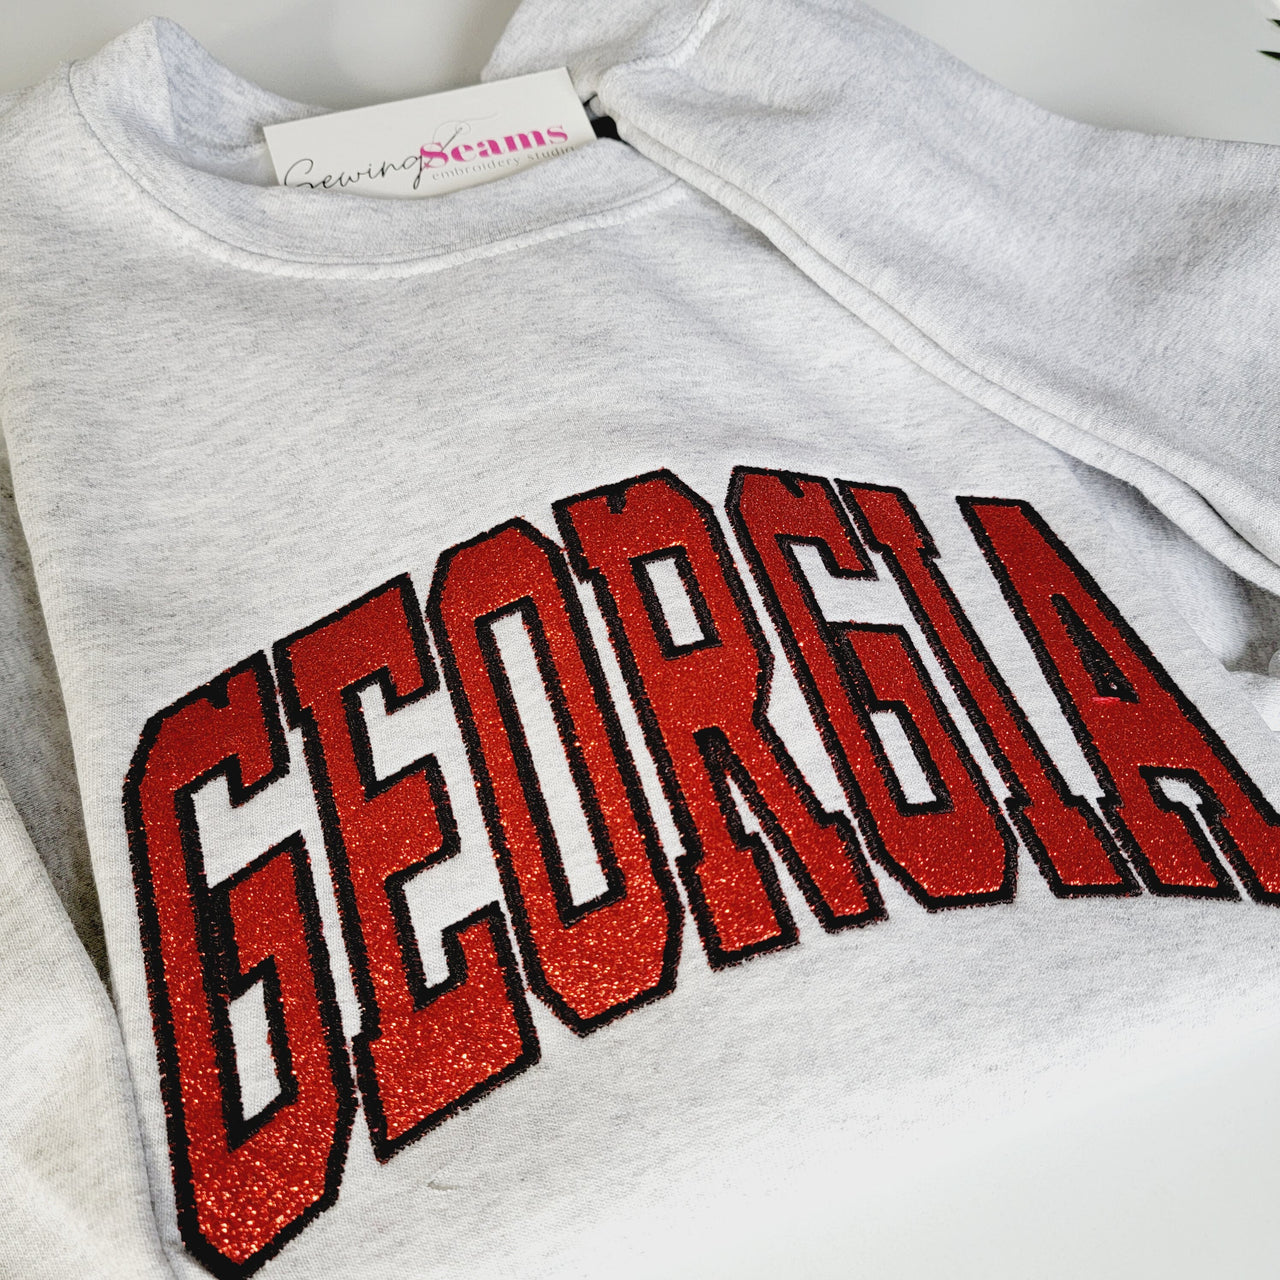 Georgia Glitter Applique Shirt